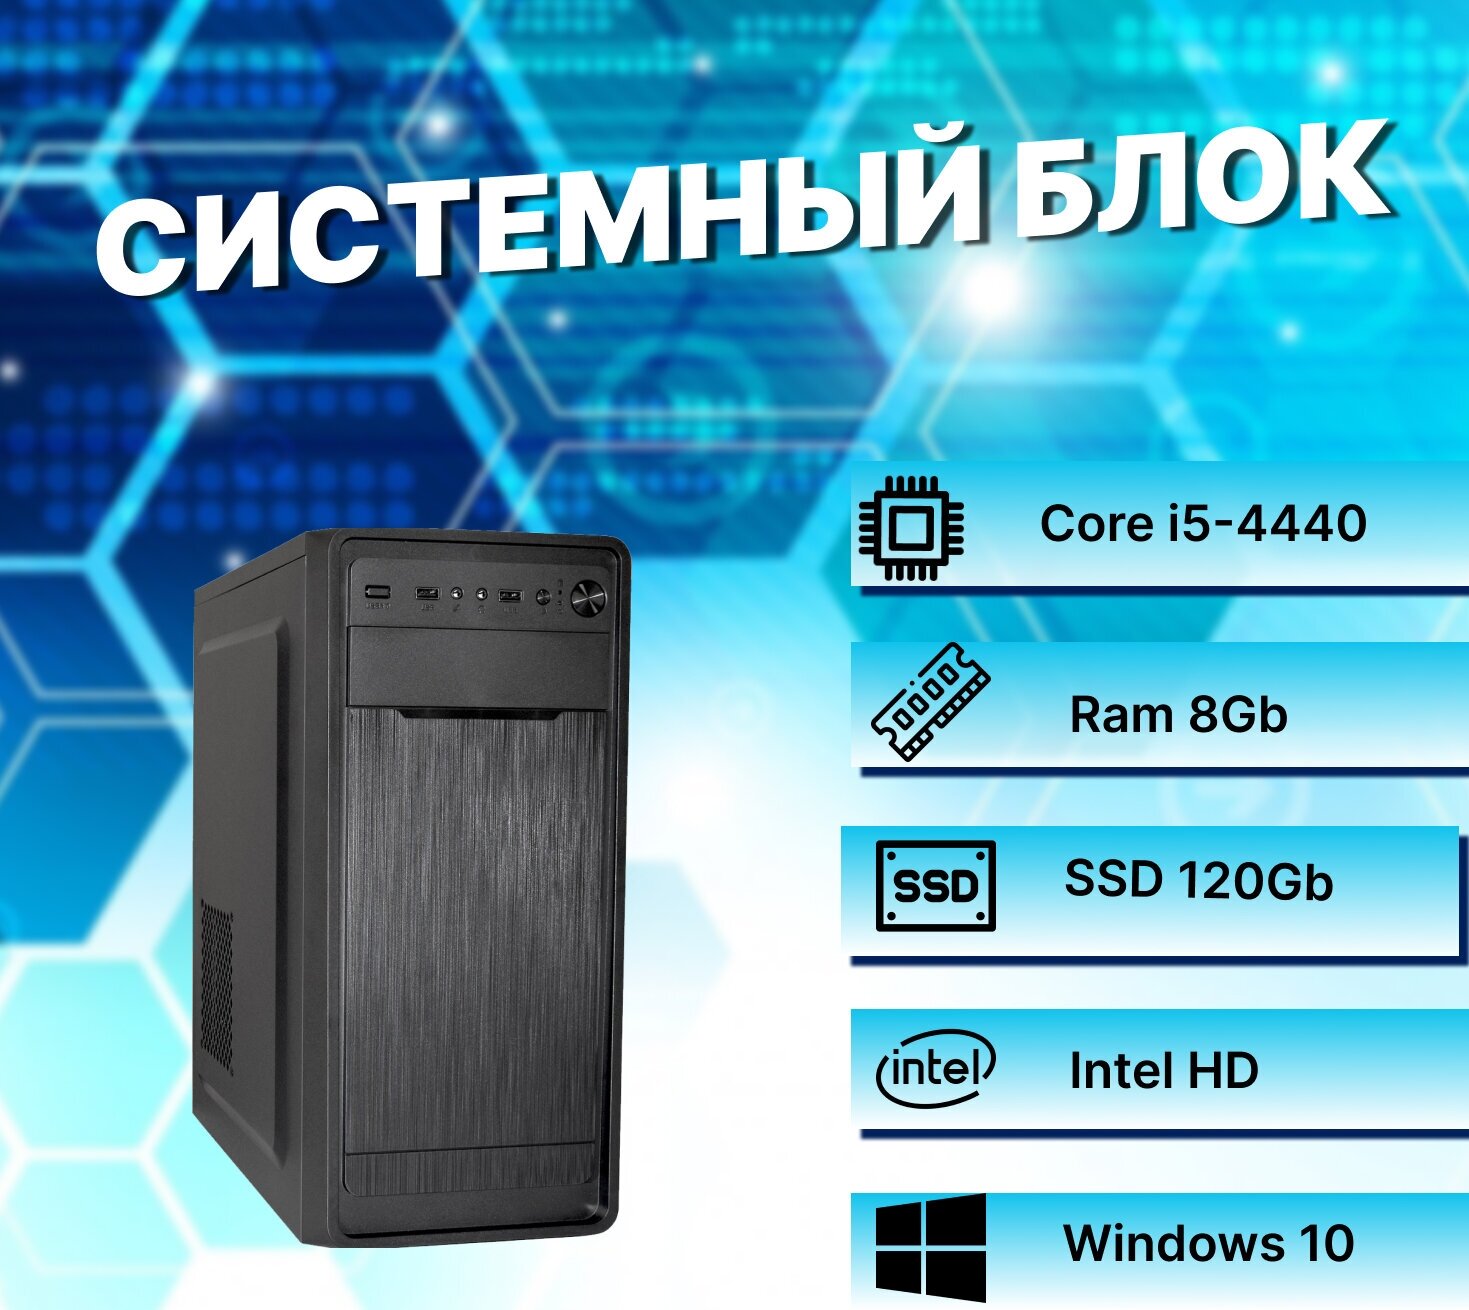 Системный блок Intel Core i5-4440 (3.1ГГц)/ RAM 8Gb/ SSD 120Gb/ Intel HD/ Windows 10 Pro